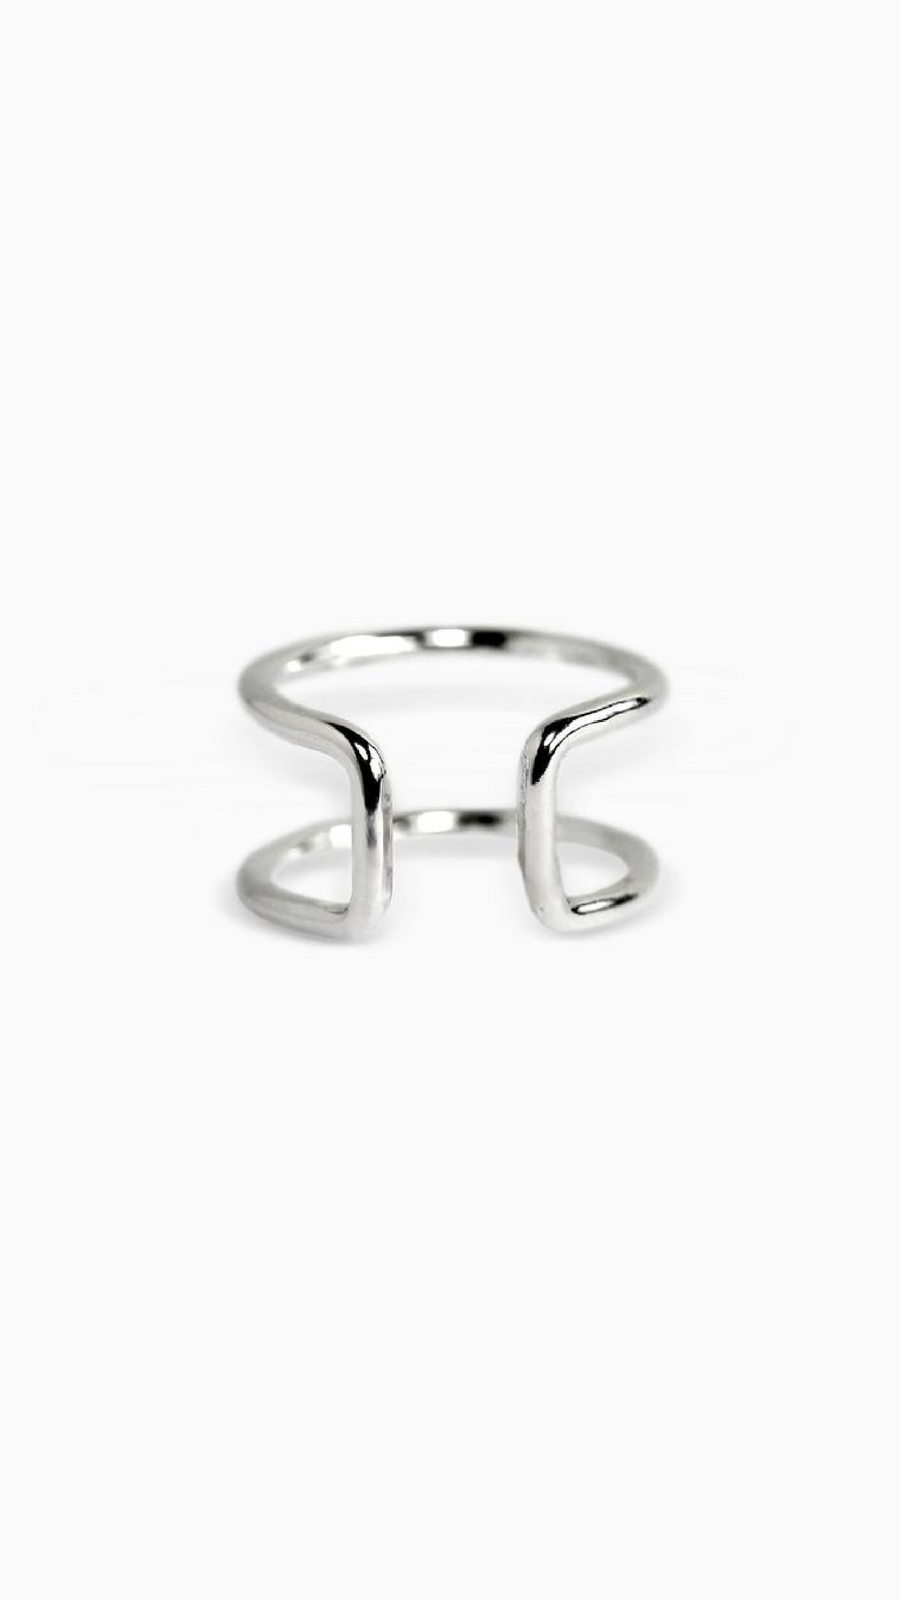 Sloane Jewelry Design Minimalist Ear Cuff in Silver